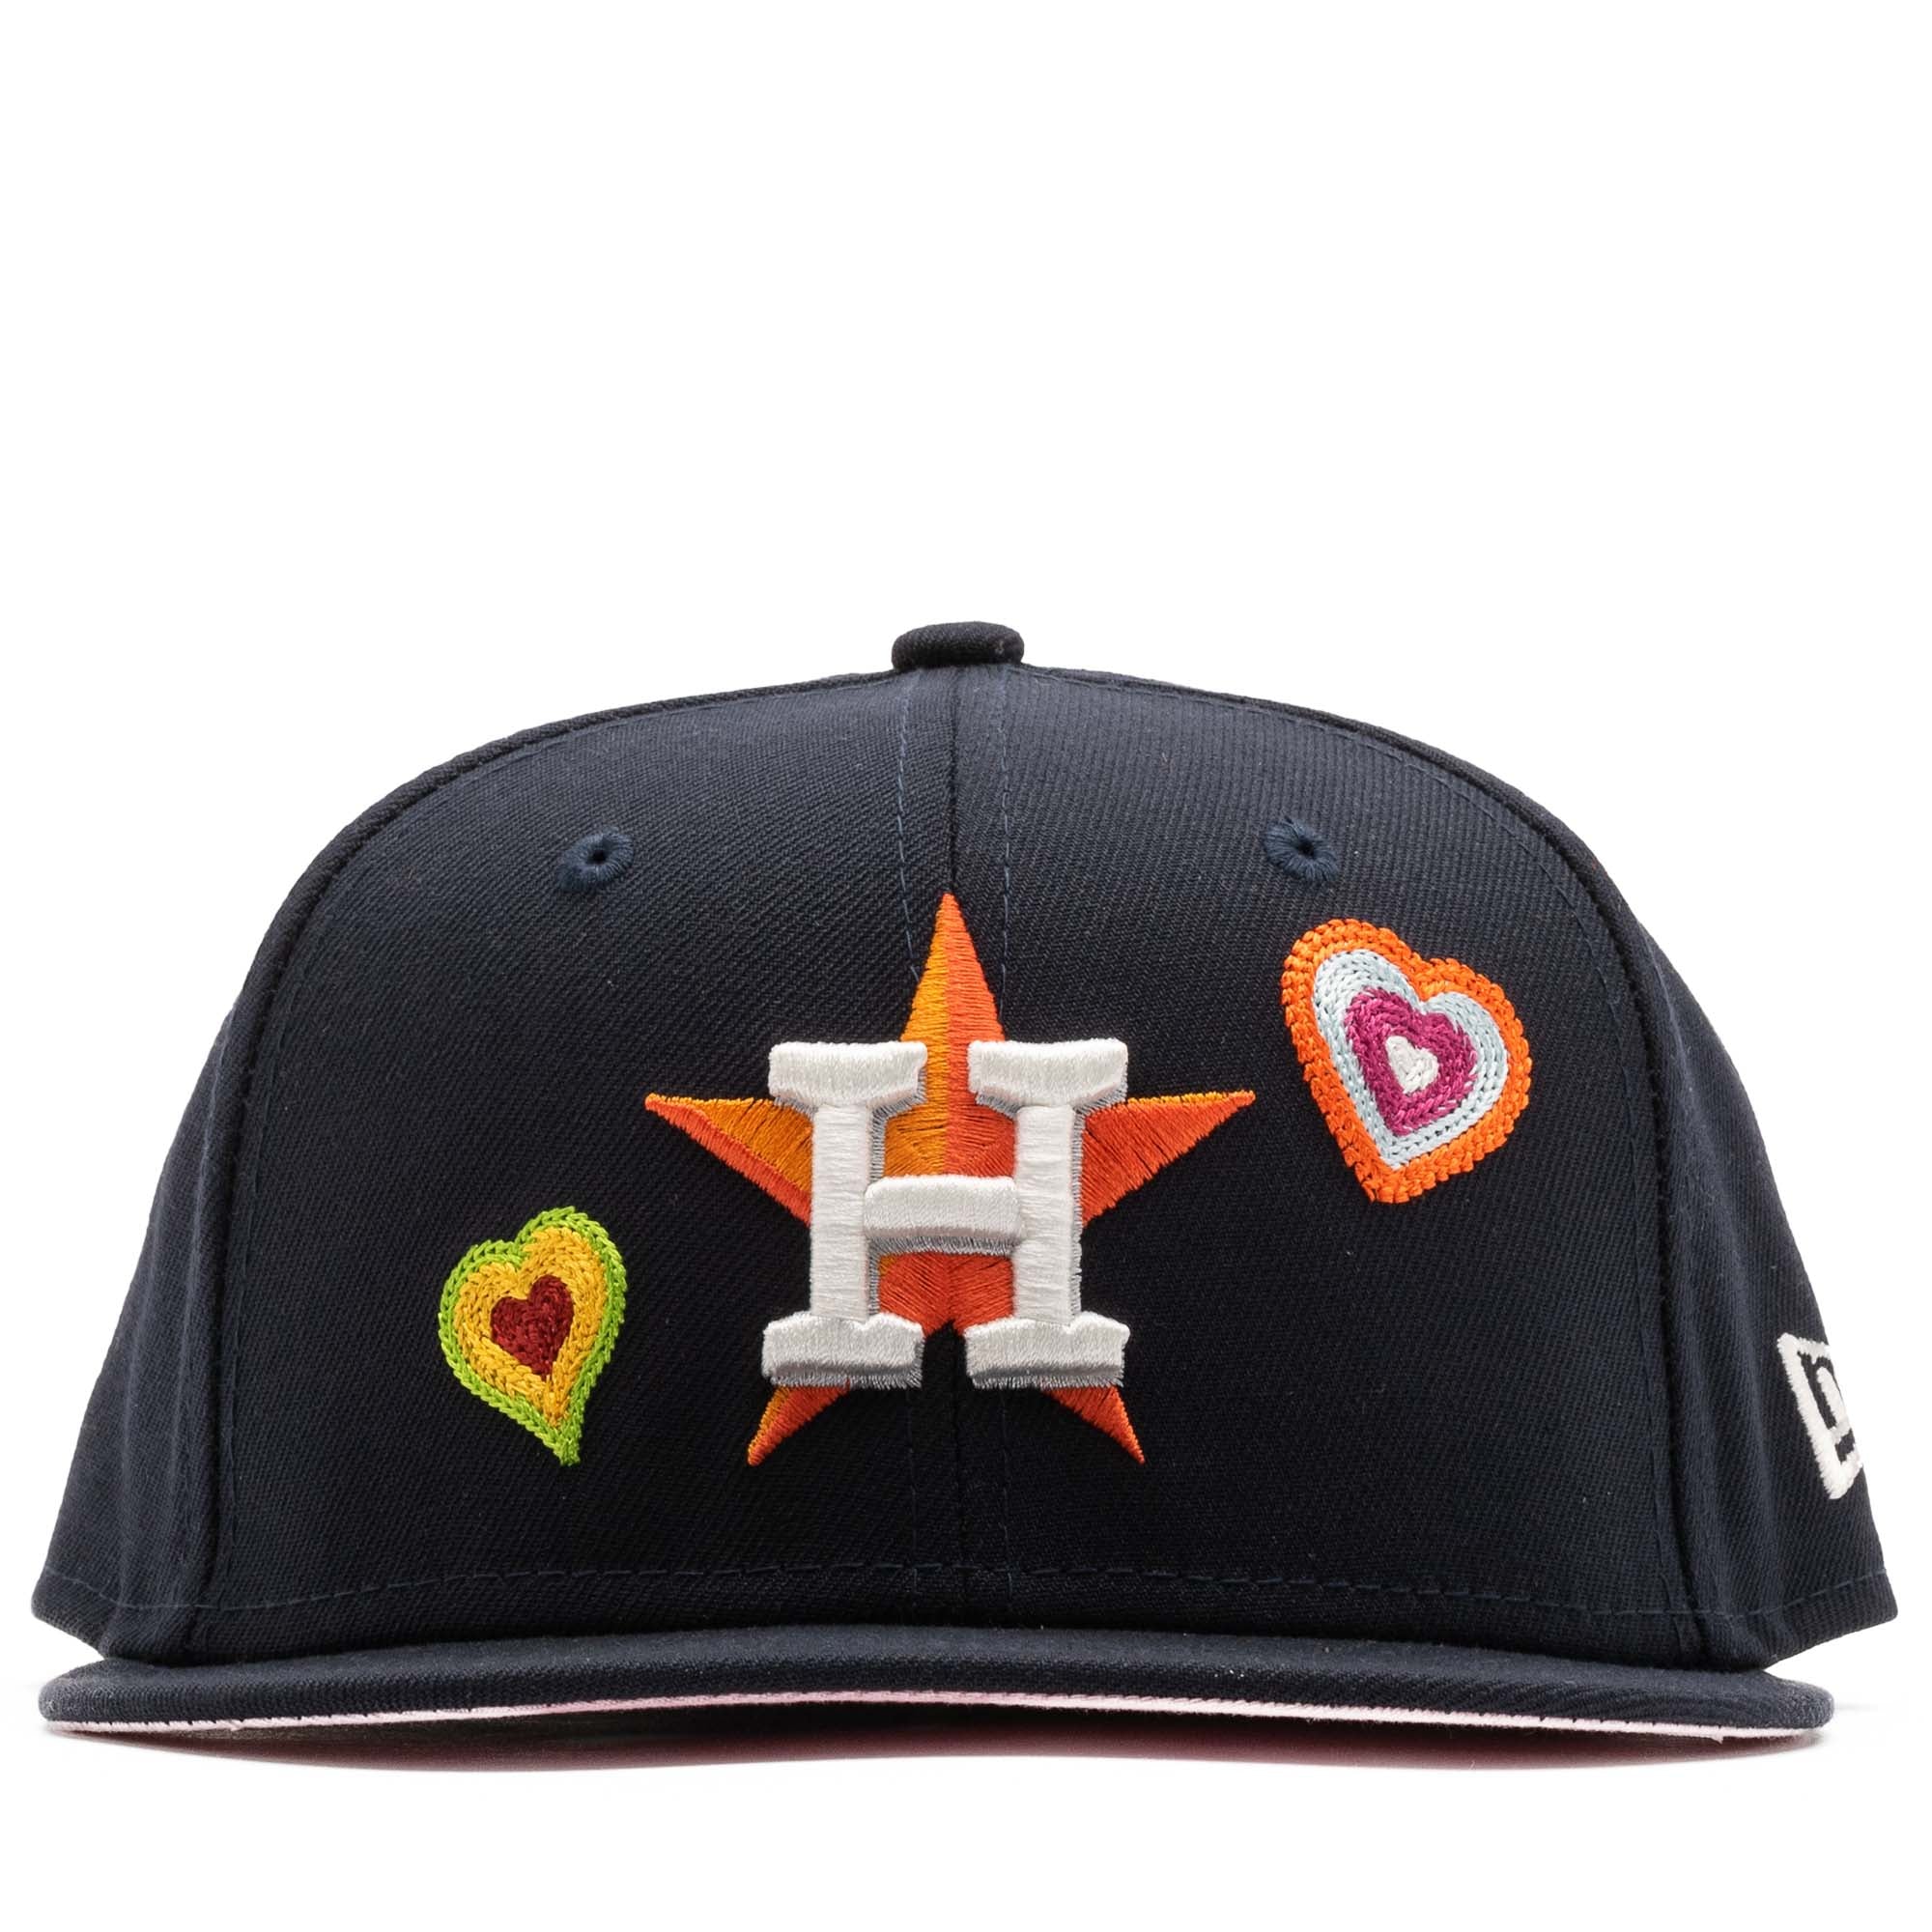 New Era Houston Astros Chainstitch 59FIFTY Hat - Navy, Size 7 5/8 by Sneaker Politics